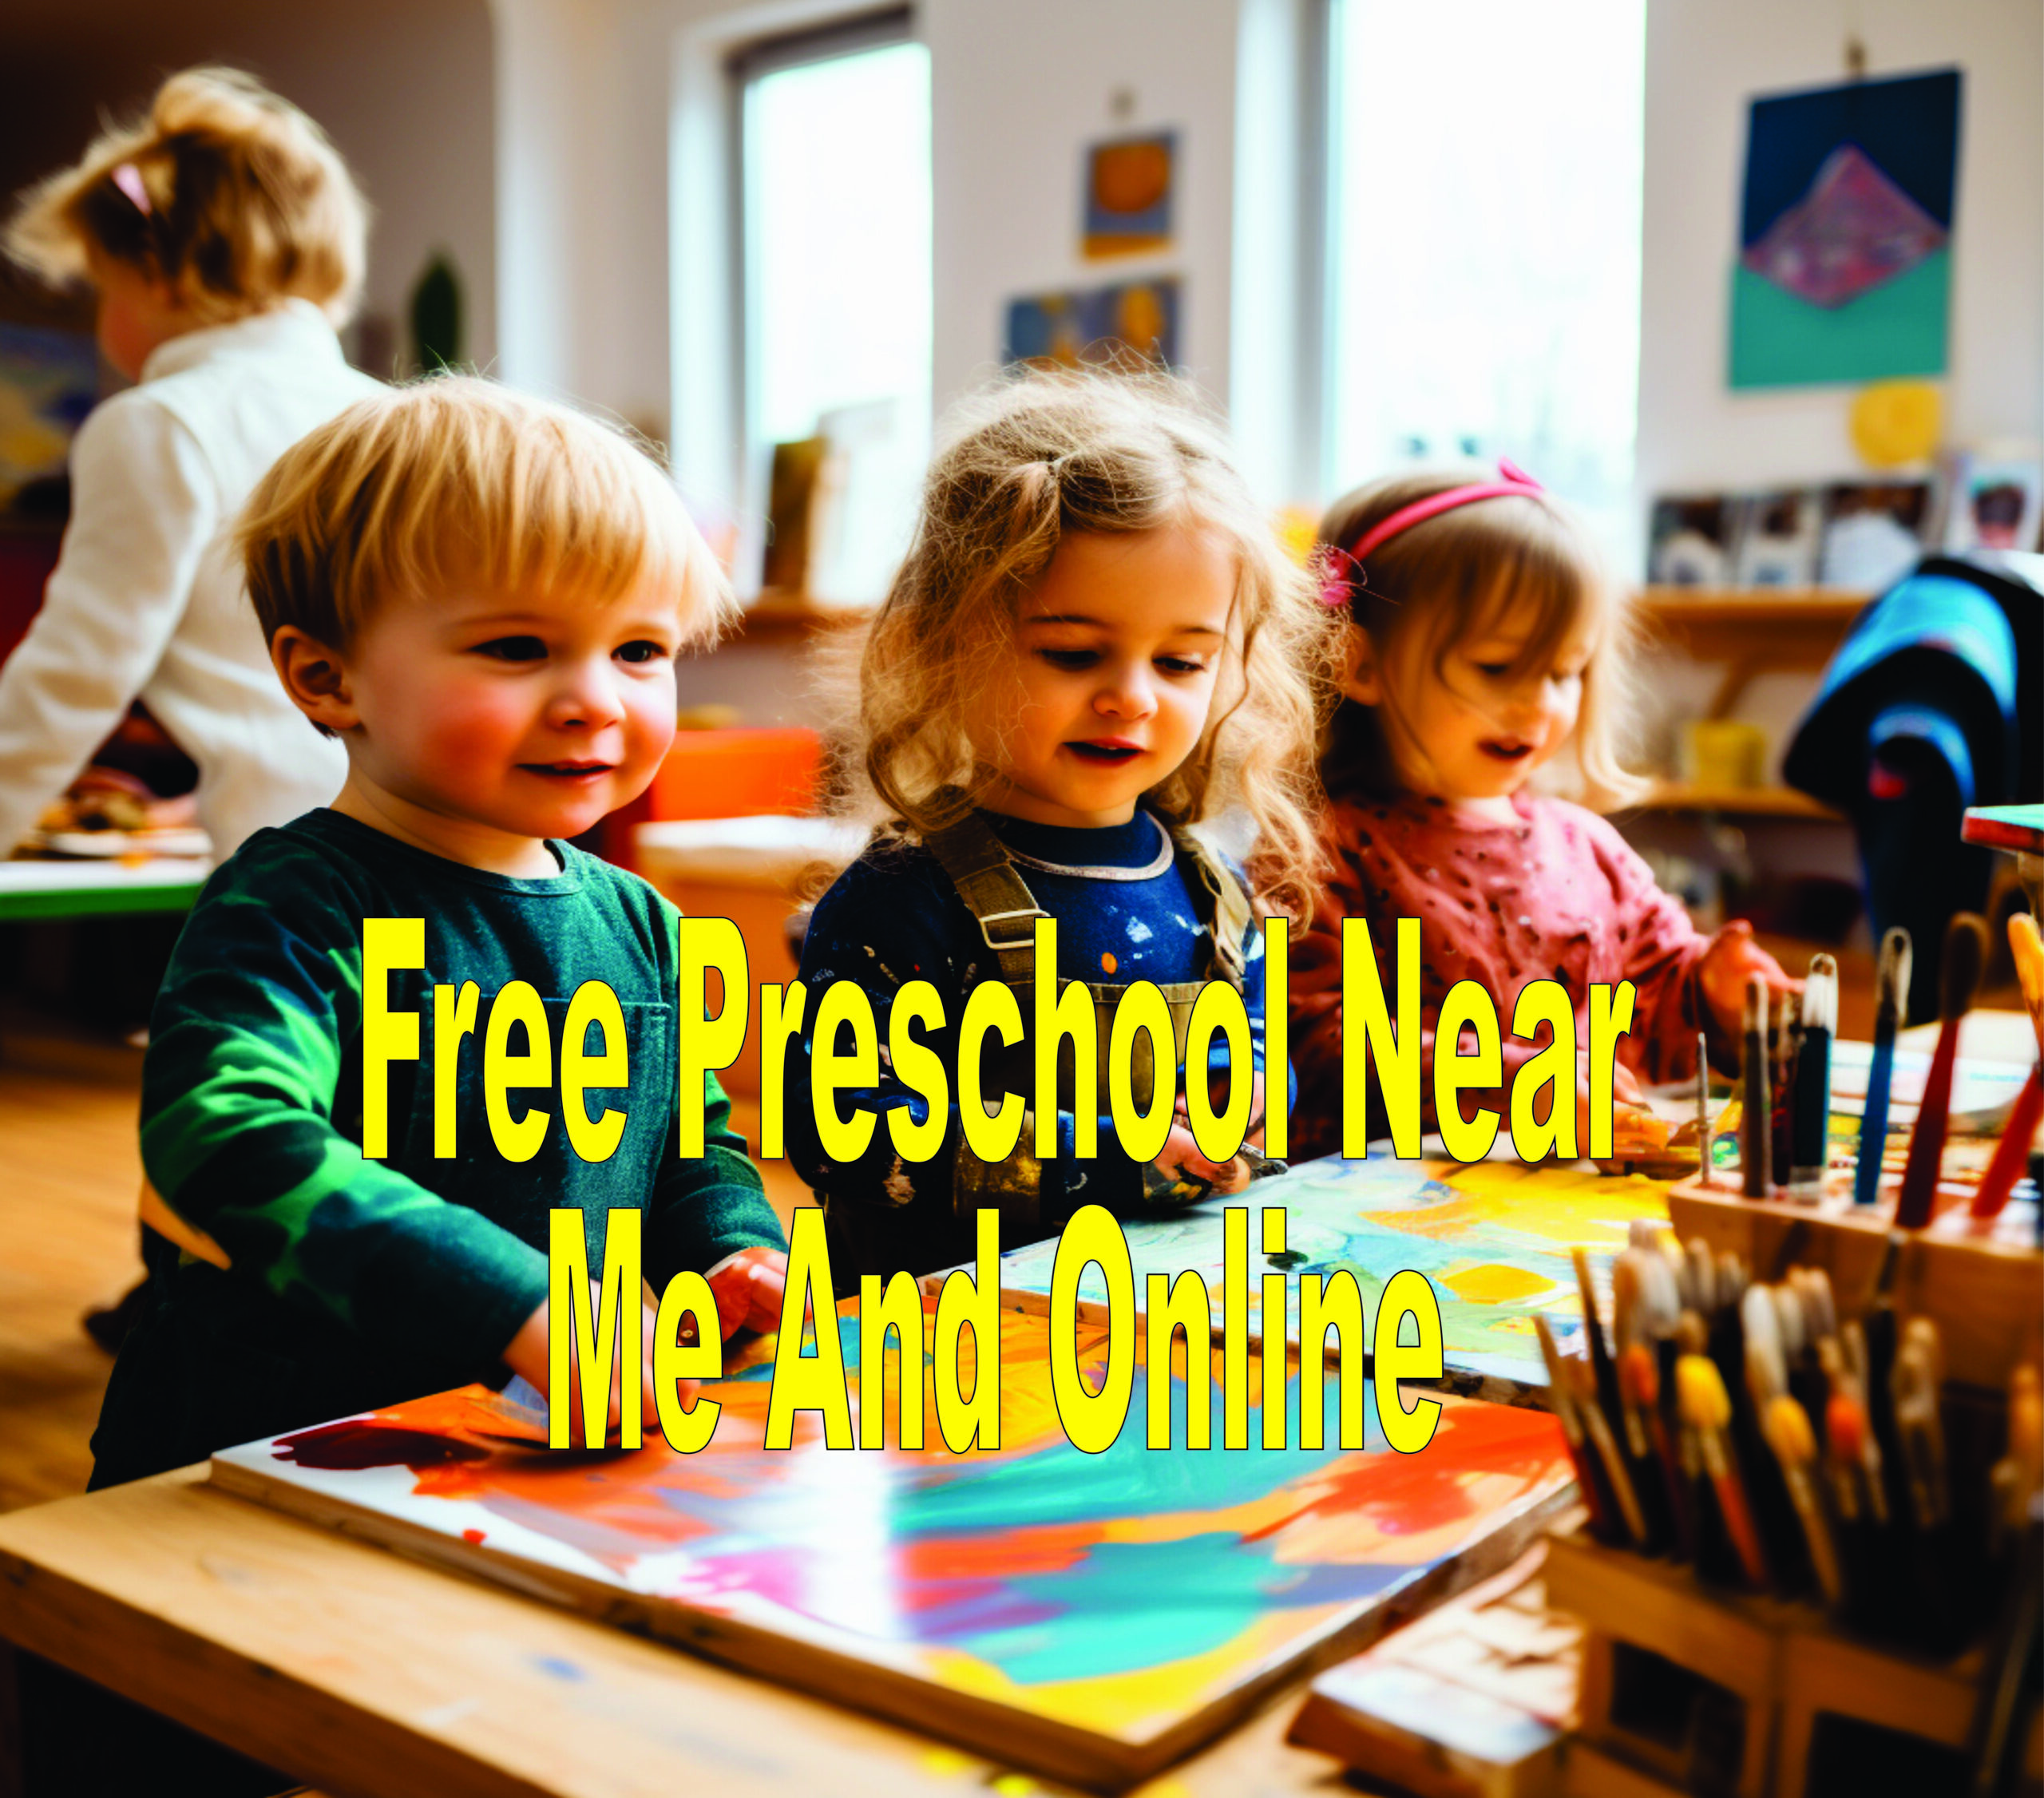 Free Preschool Near Me And Online